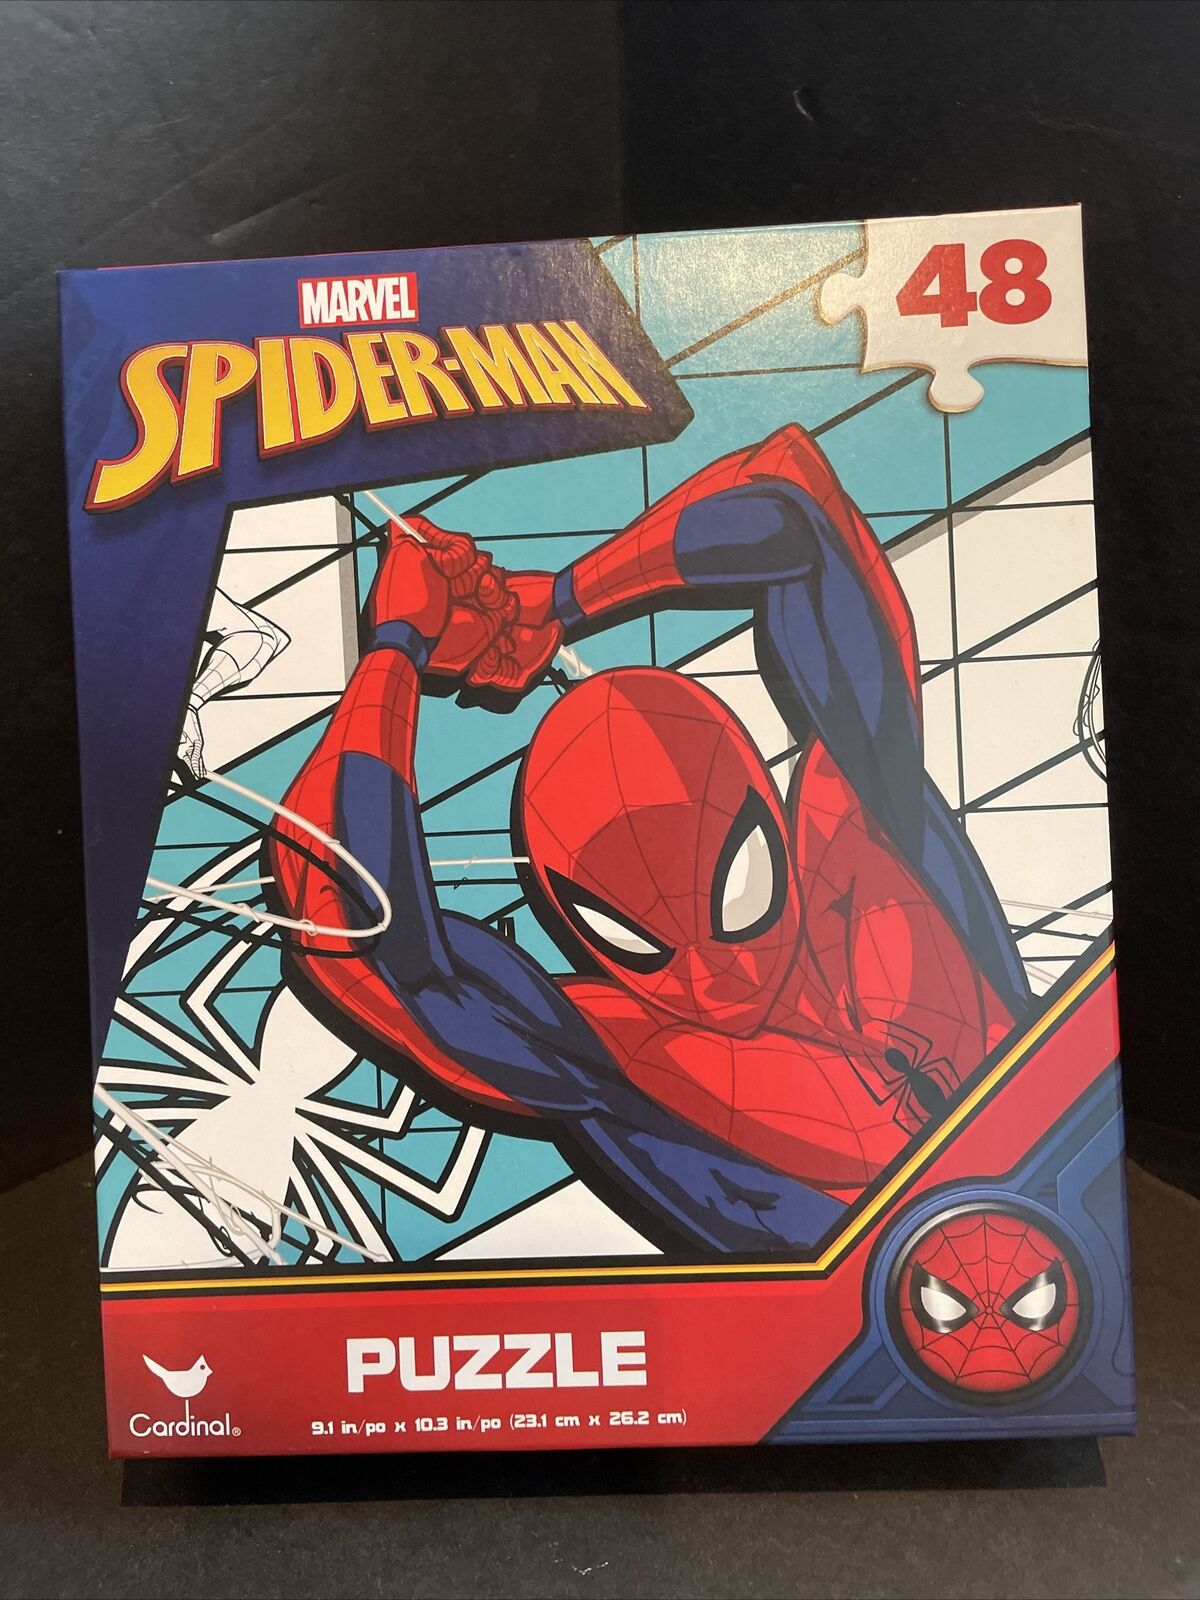 Marvel Spiderman 48 Piece Jigsaw Puzzle 9.1”x10.3” – The Odd